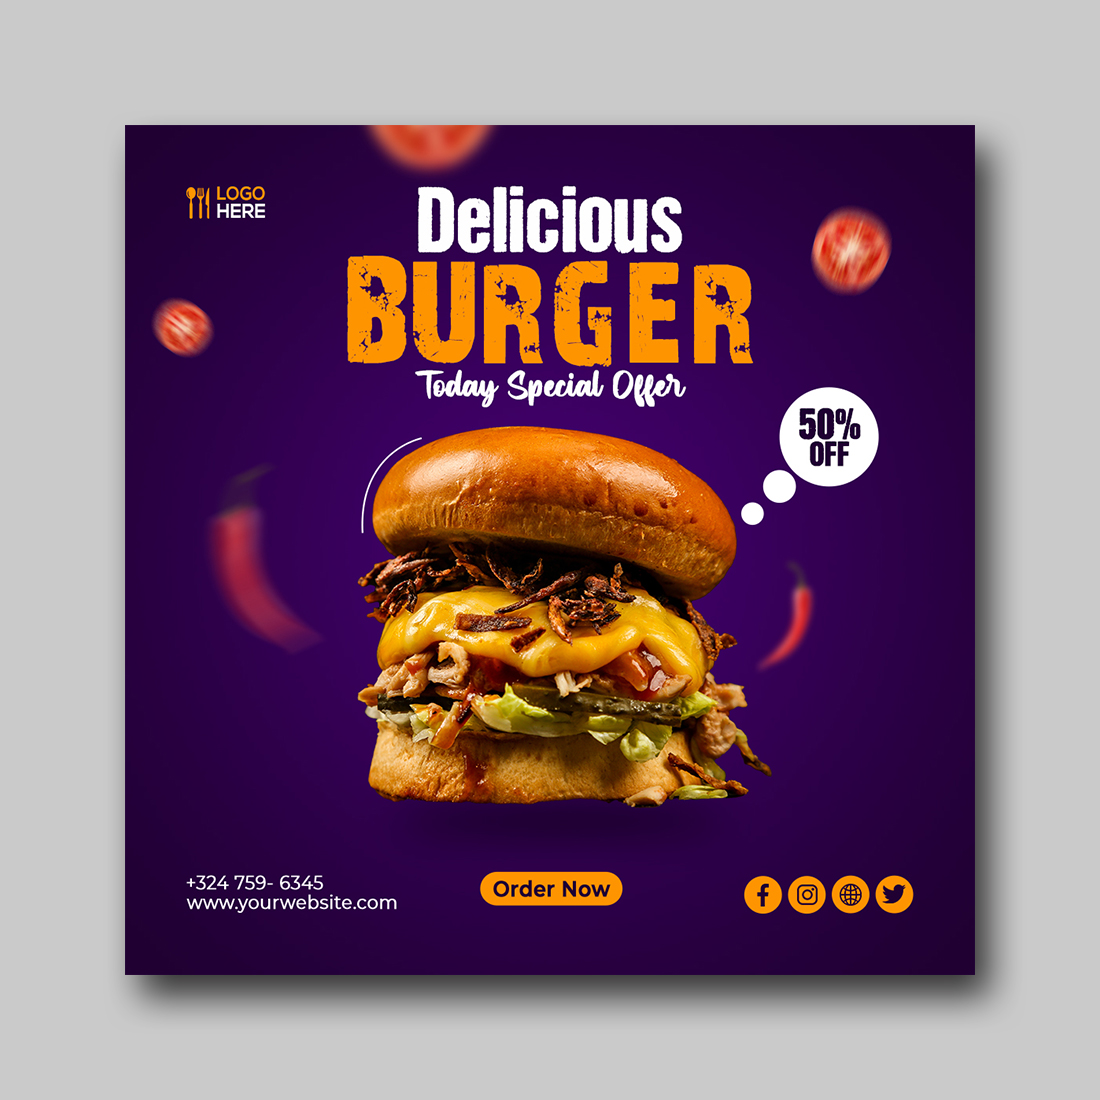 Social Media Banner Burger cover image.